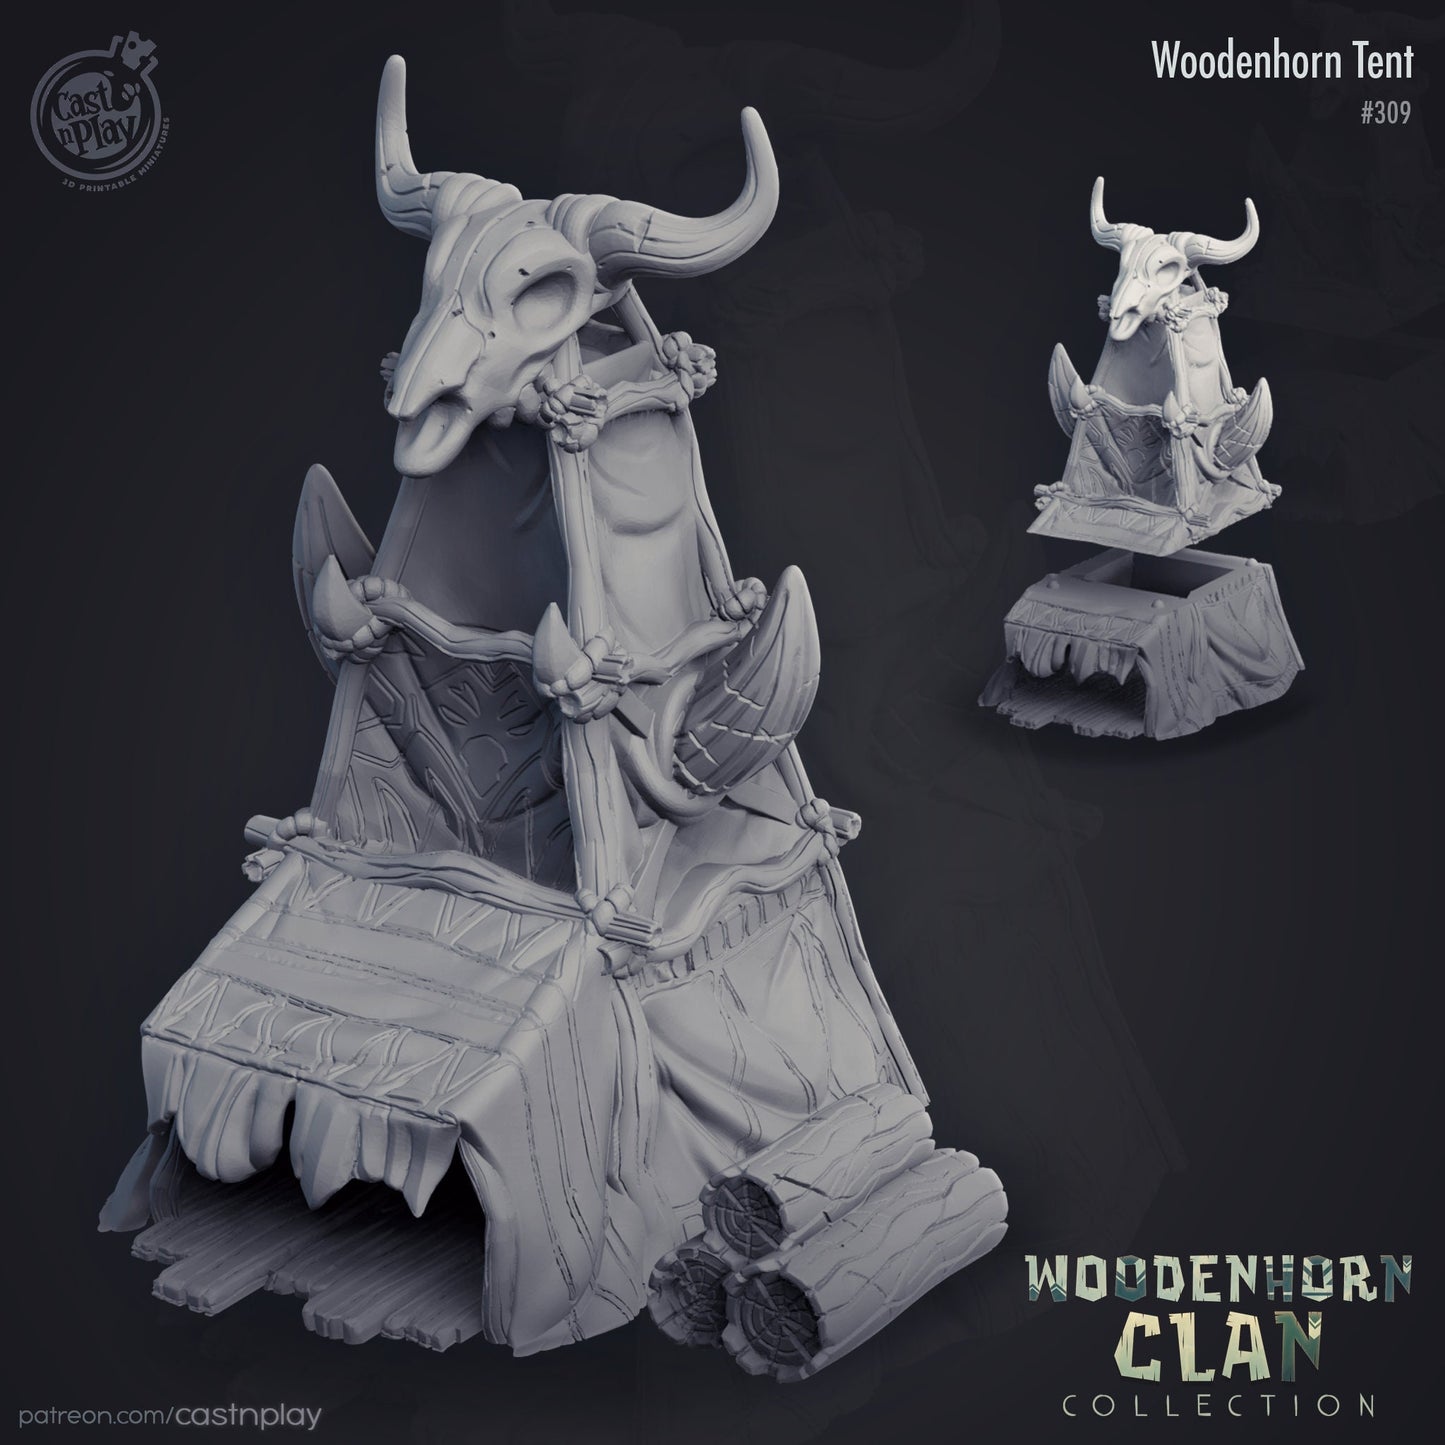 WOODENHORN TENT, by Cast n Play // 3D Print on Demand / D&D / Pathfinder / RPG